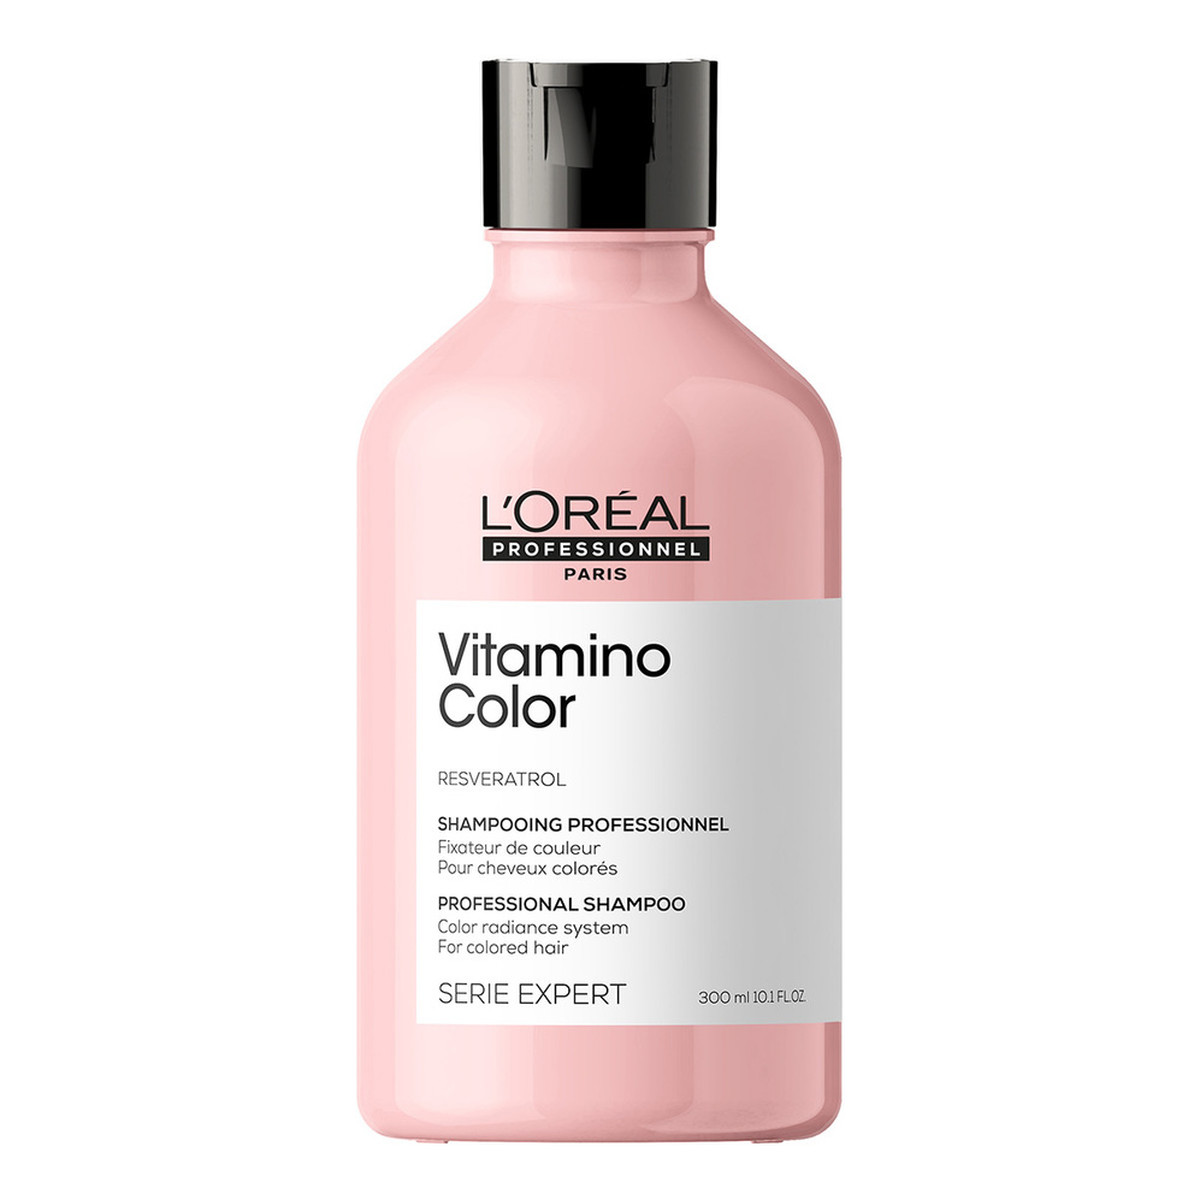 L'Oreal Paris Serie expert vitamino color shampoo szampon do włosów koloryzowanych 300ml